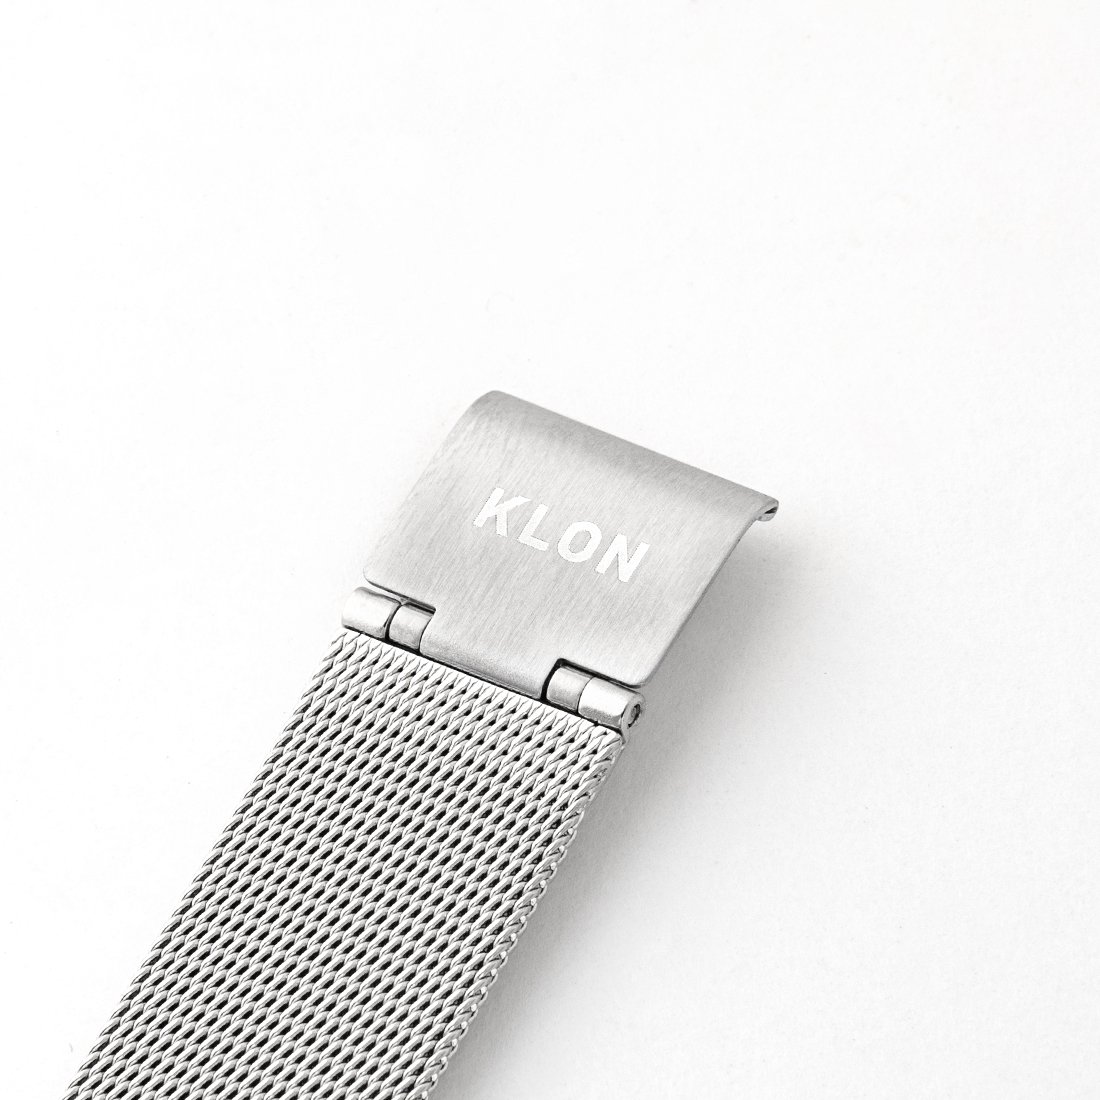 KLON INTERSECT TIME -SILVER MESH- 38mm カジュアル 腕時計